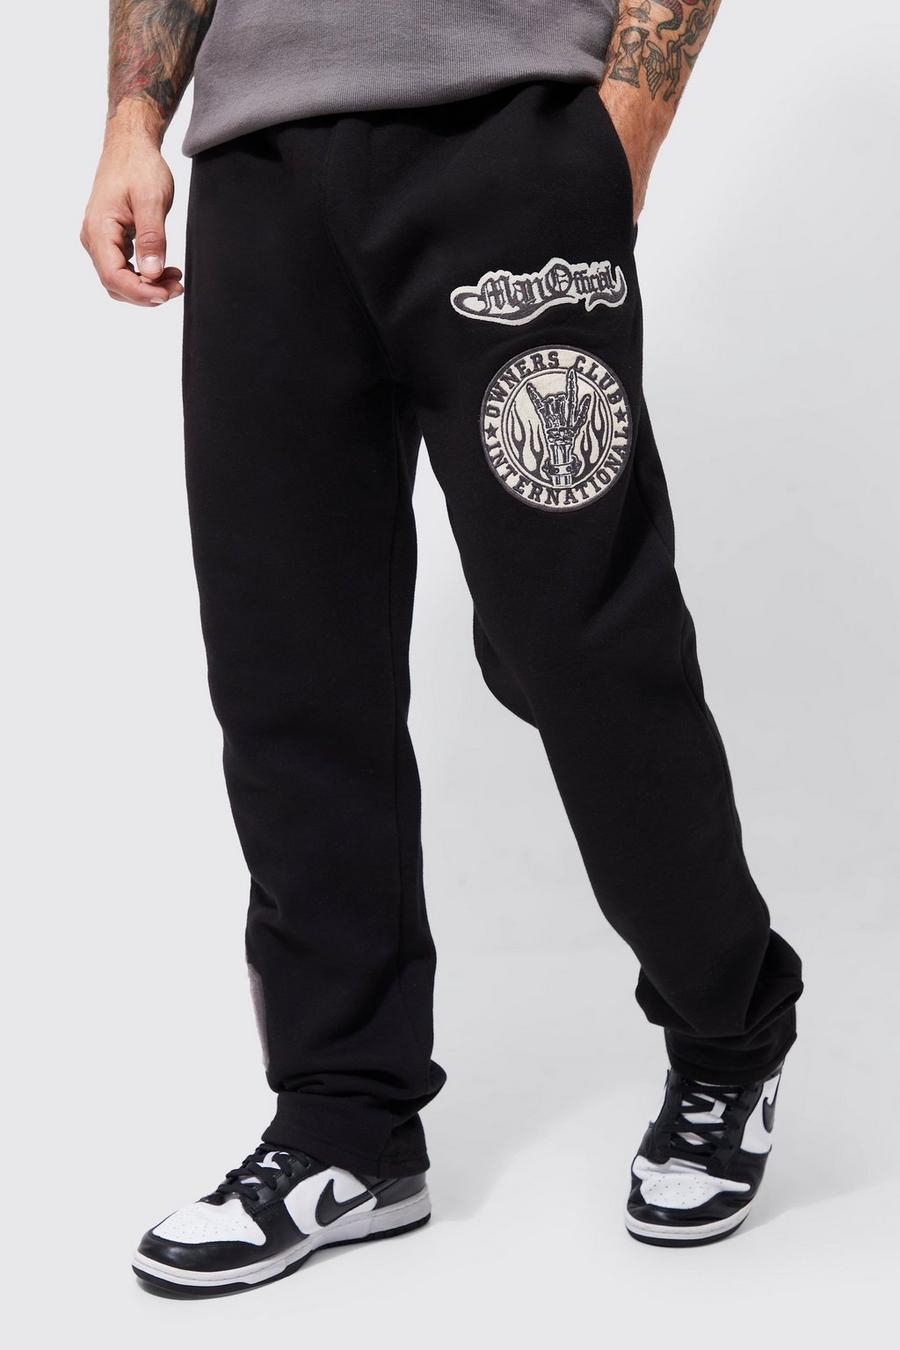 Pantaloni tuta Man Official stile Varsity con stemmi, Black image number 1